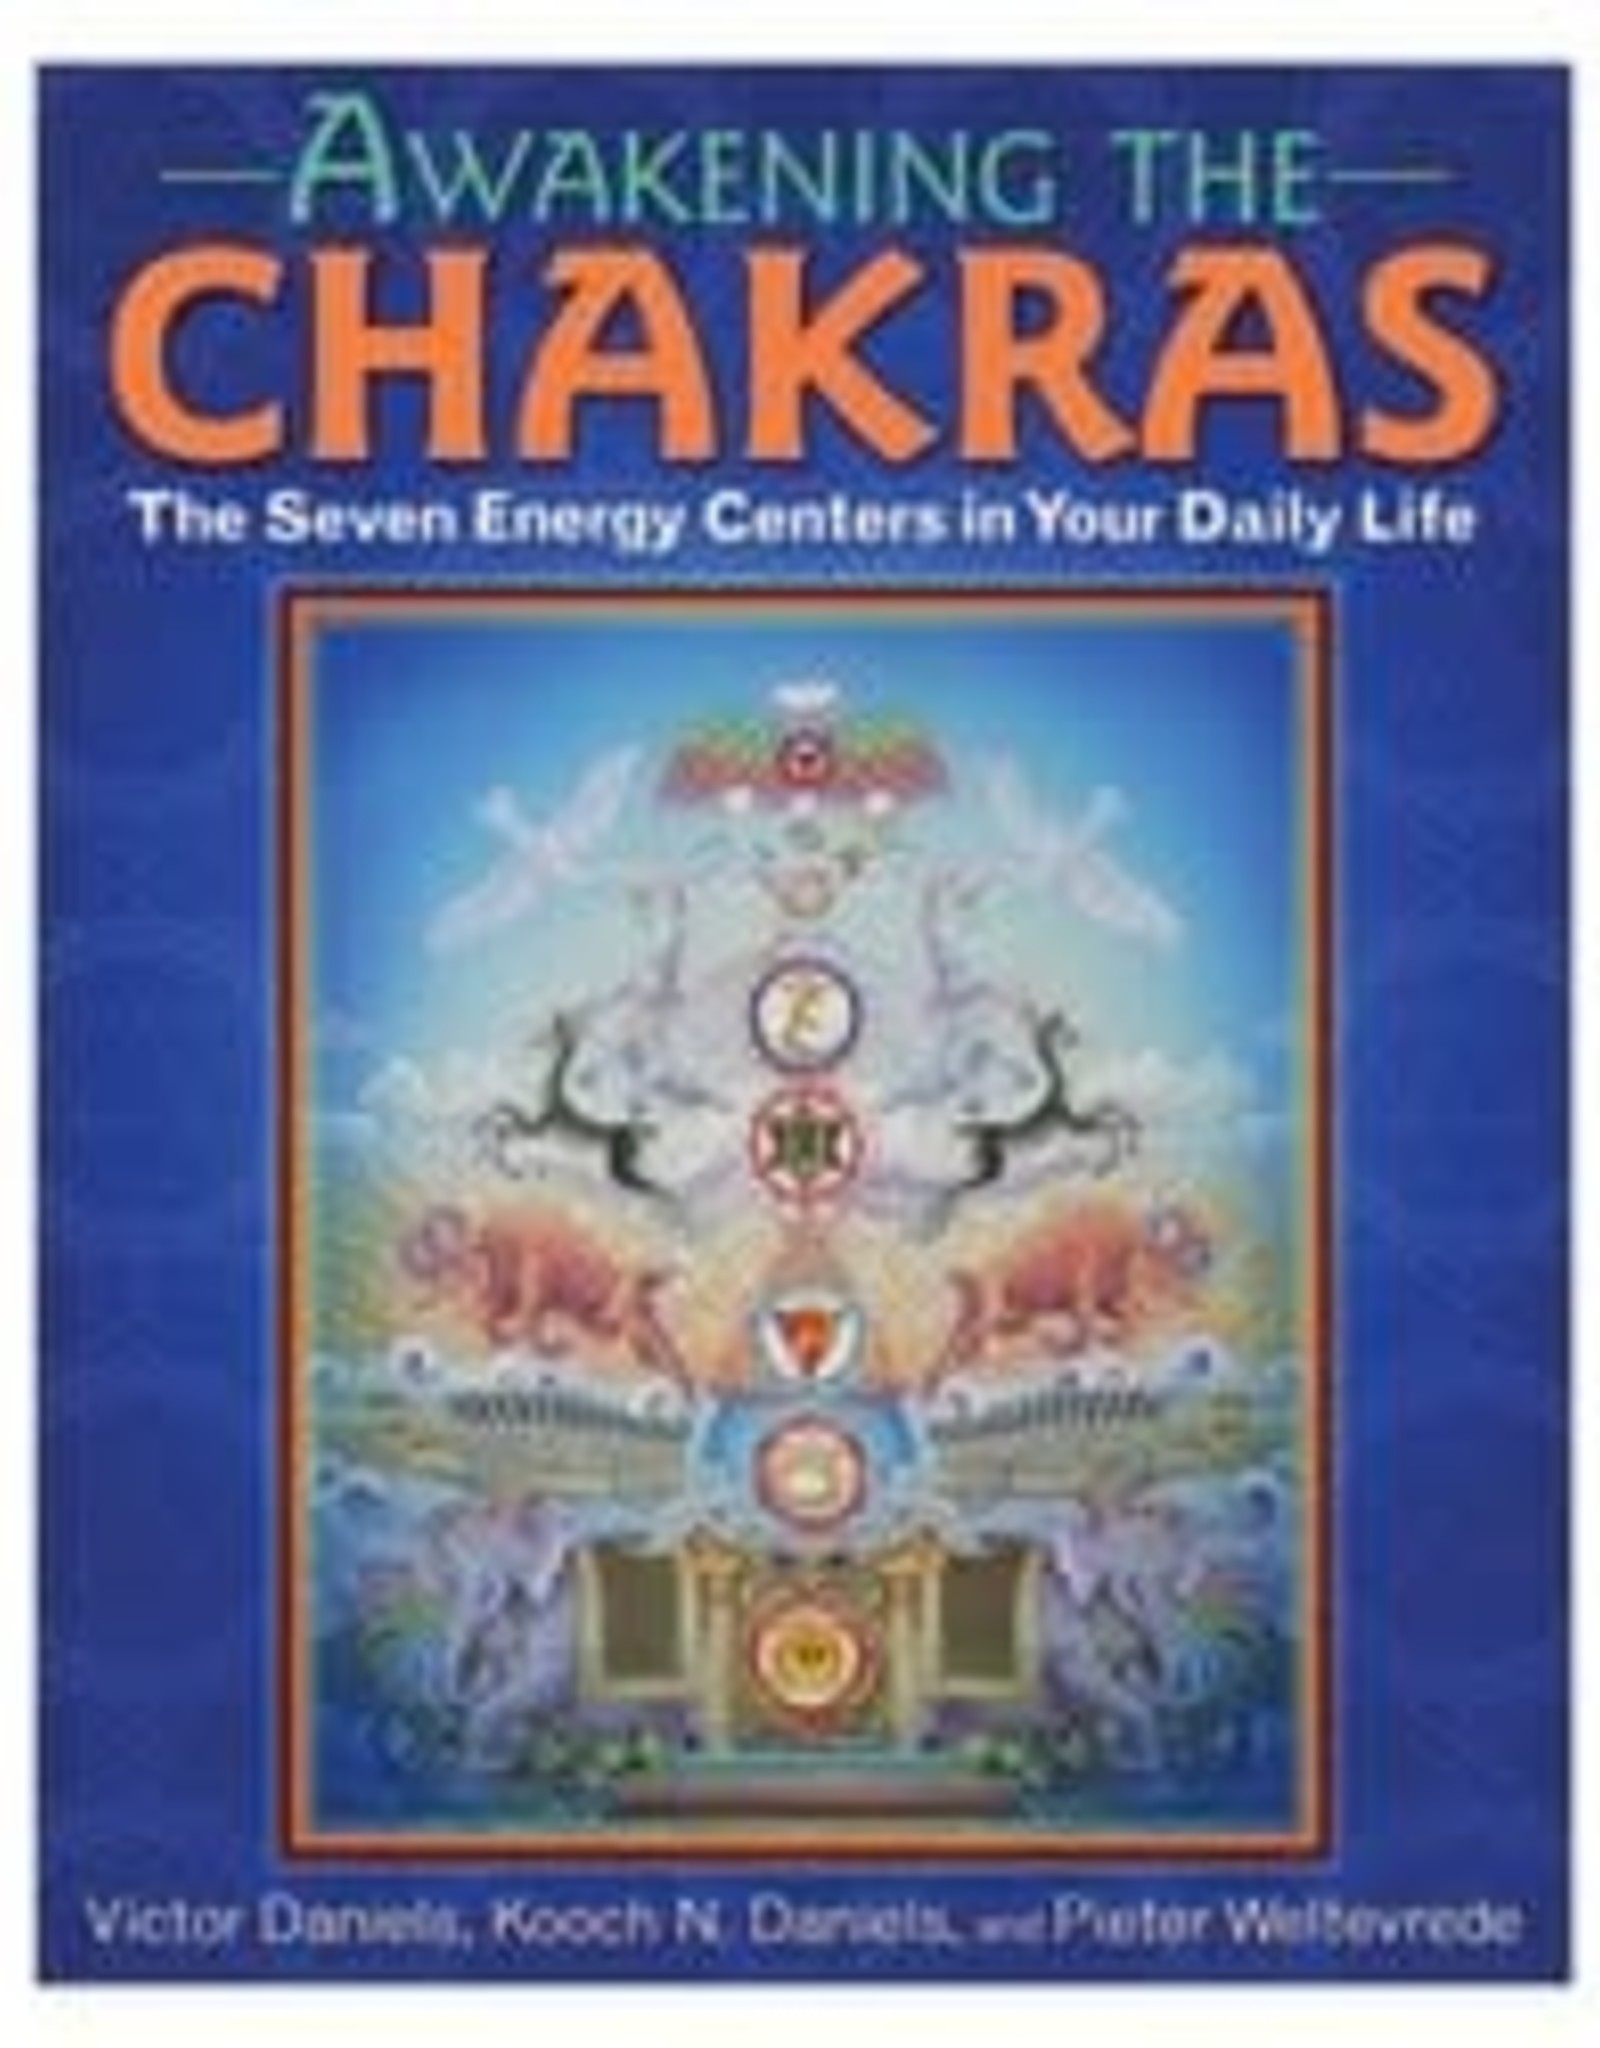 Victor Daniels Awakening the Chakras by Victor Daniels, Kooch N. Daniels & Pieter Weltervrede